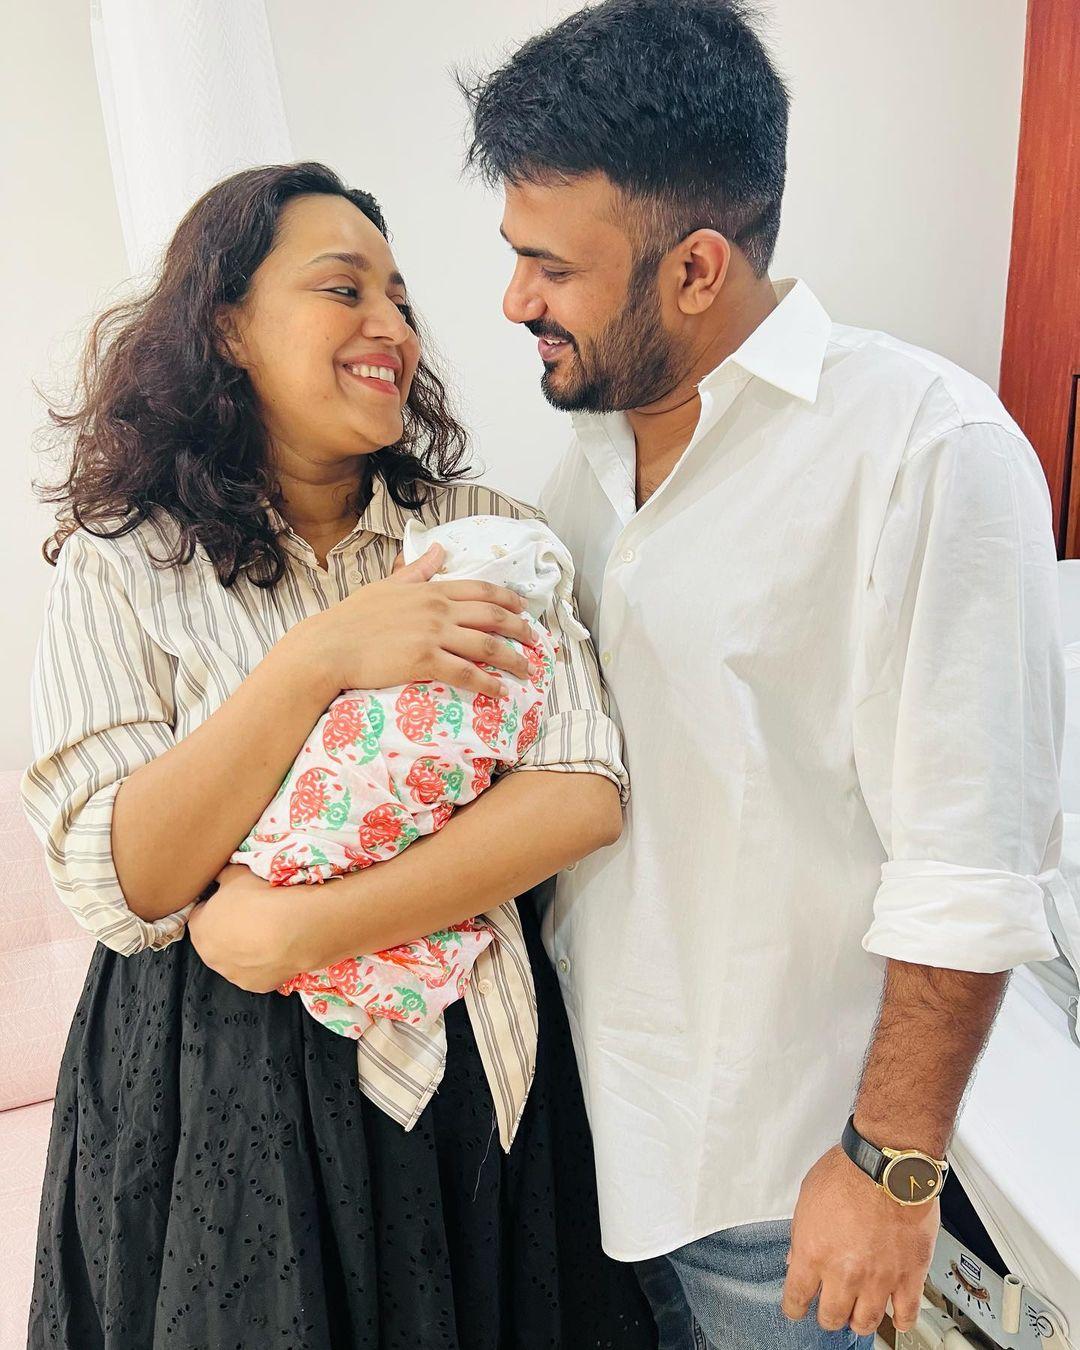 Swara Bhasker and Fahad Ahmad
One of the most popular couples of the industry, Swara Bhasker and Samajwadi Party's state youth president, Fahad Ahmad, became parents to a baby girl Raabiyaa on September 23 